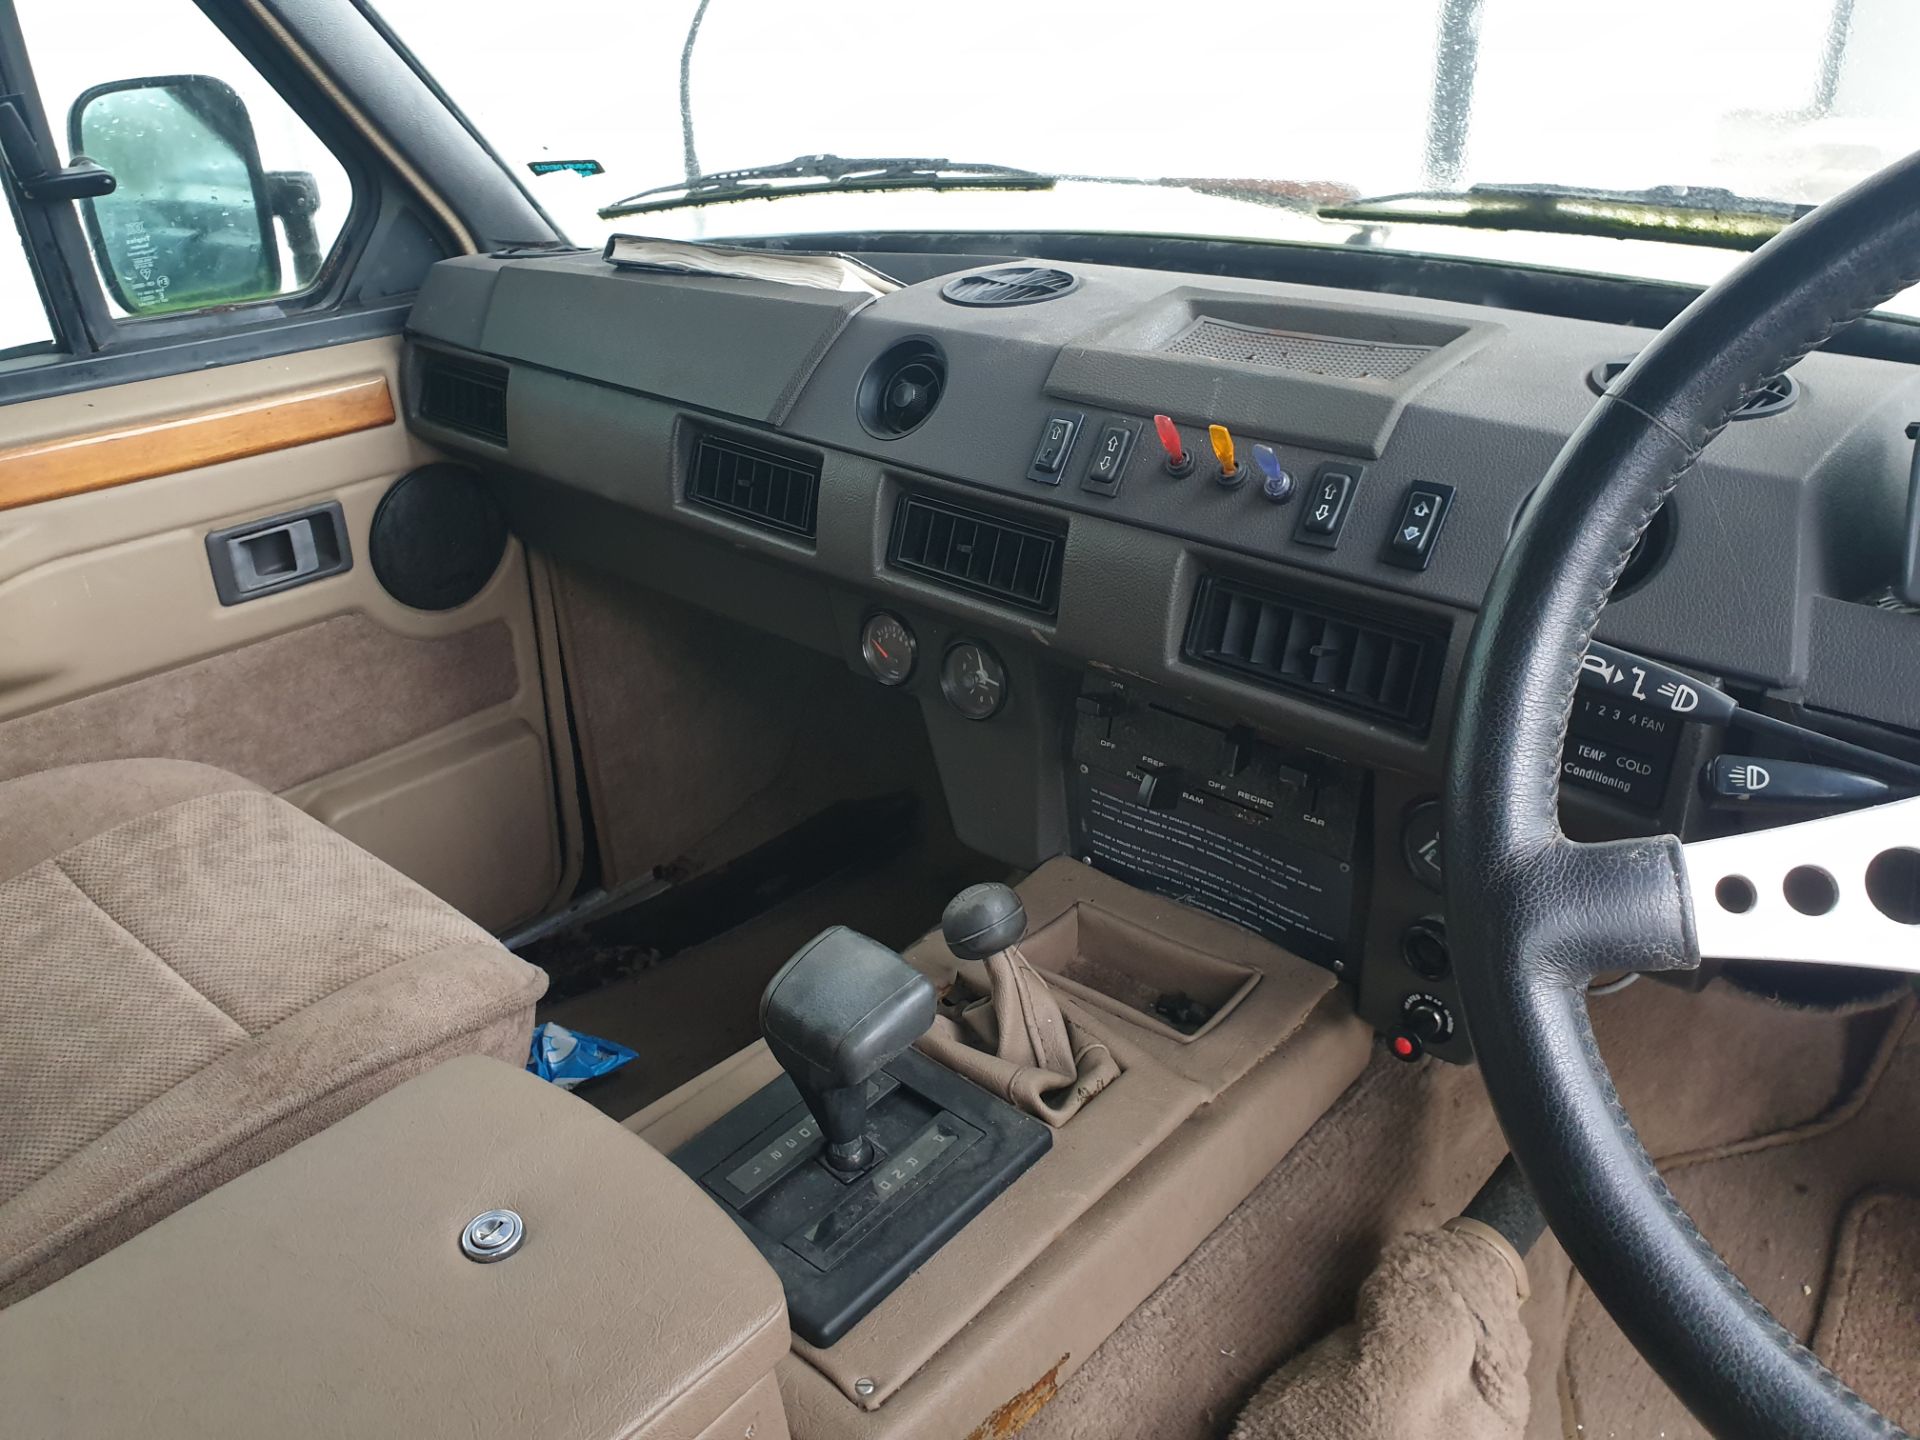 Range Rover Carmicheal 6 Wheel Conversion - Image 13 of 18